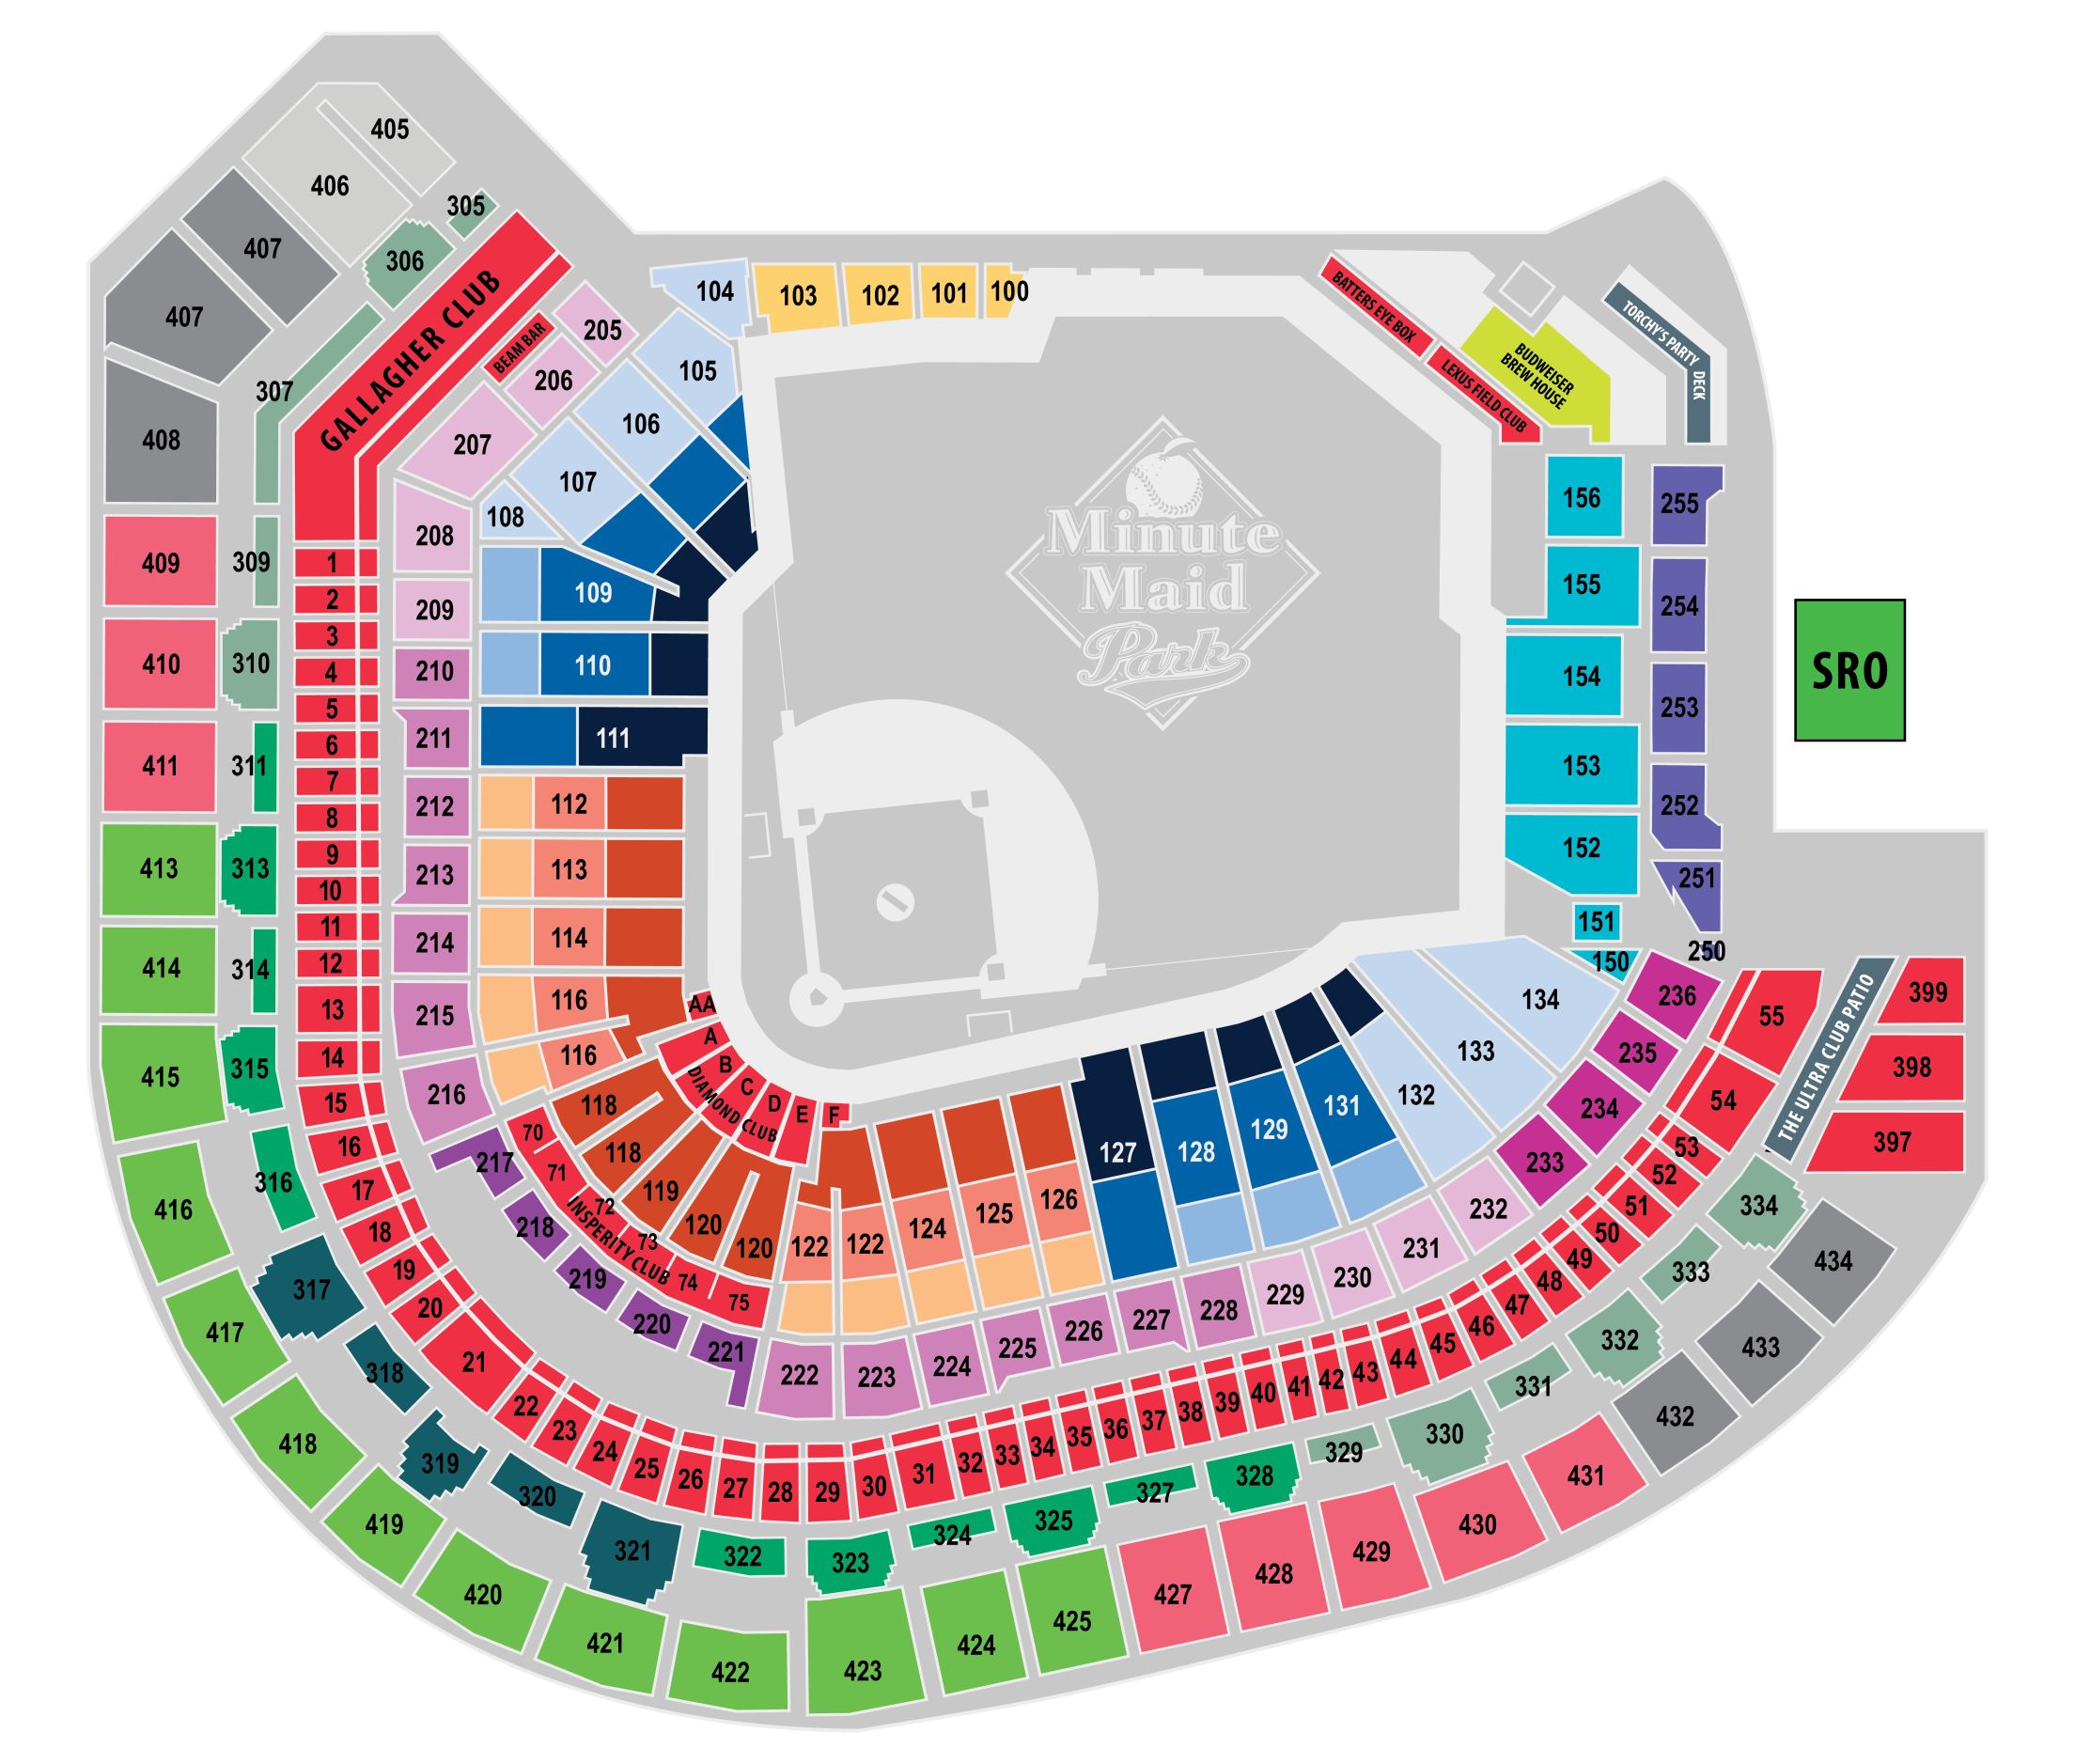 Astros Season Ticket Information Seating Map Houston Astros